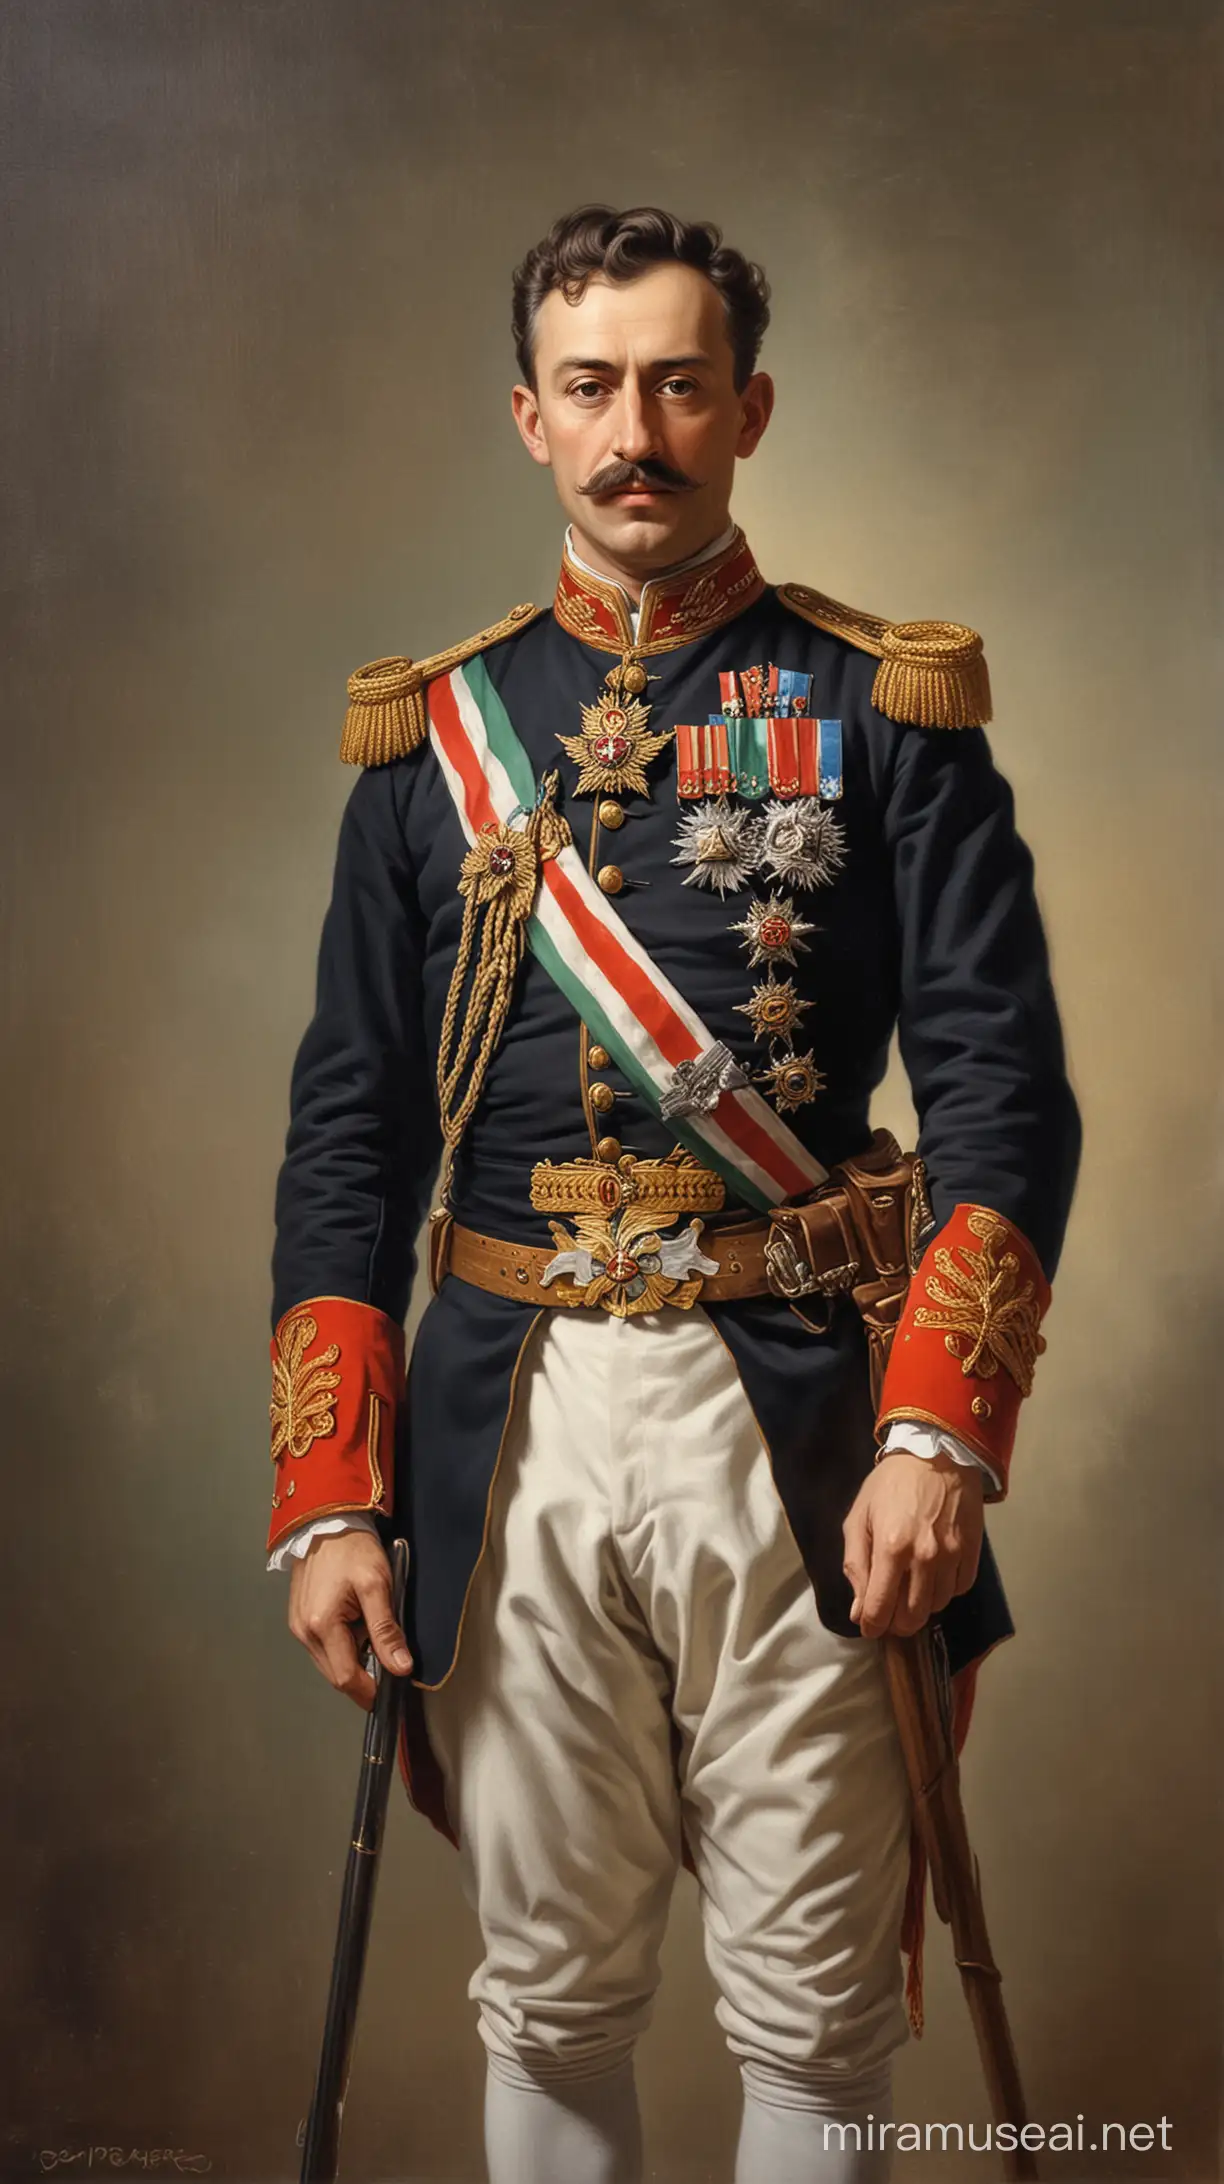 Portrait of Francisco Ferdinando AustroHungarian Archduke